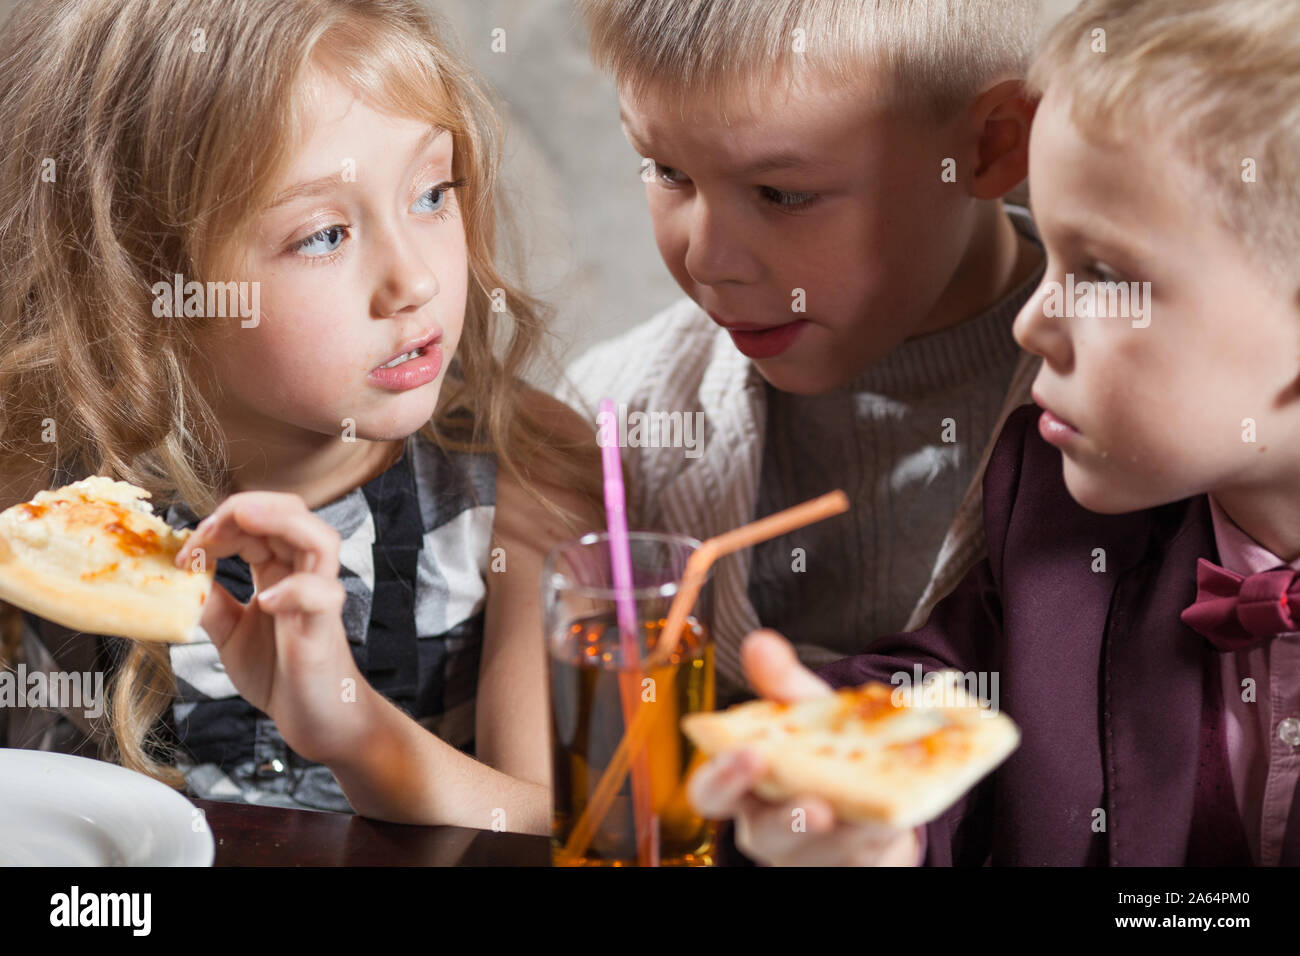 children eat pizza in a restaurant Stock Photo